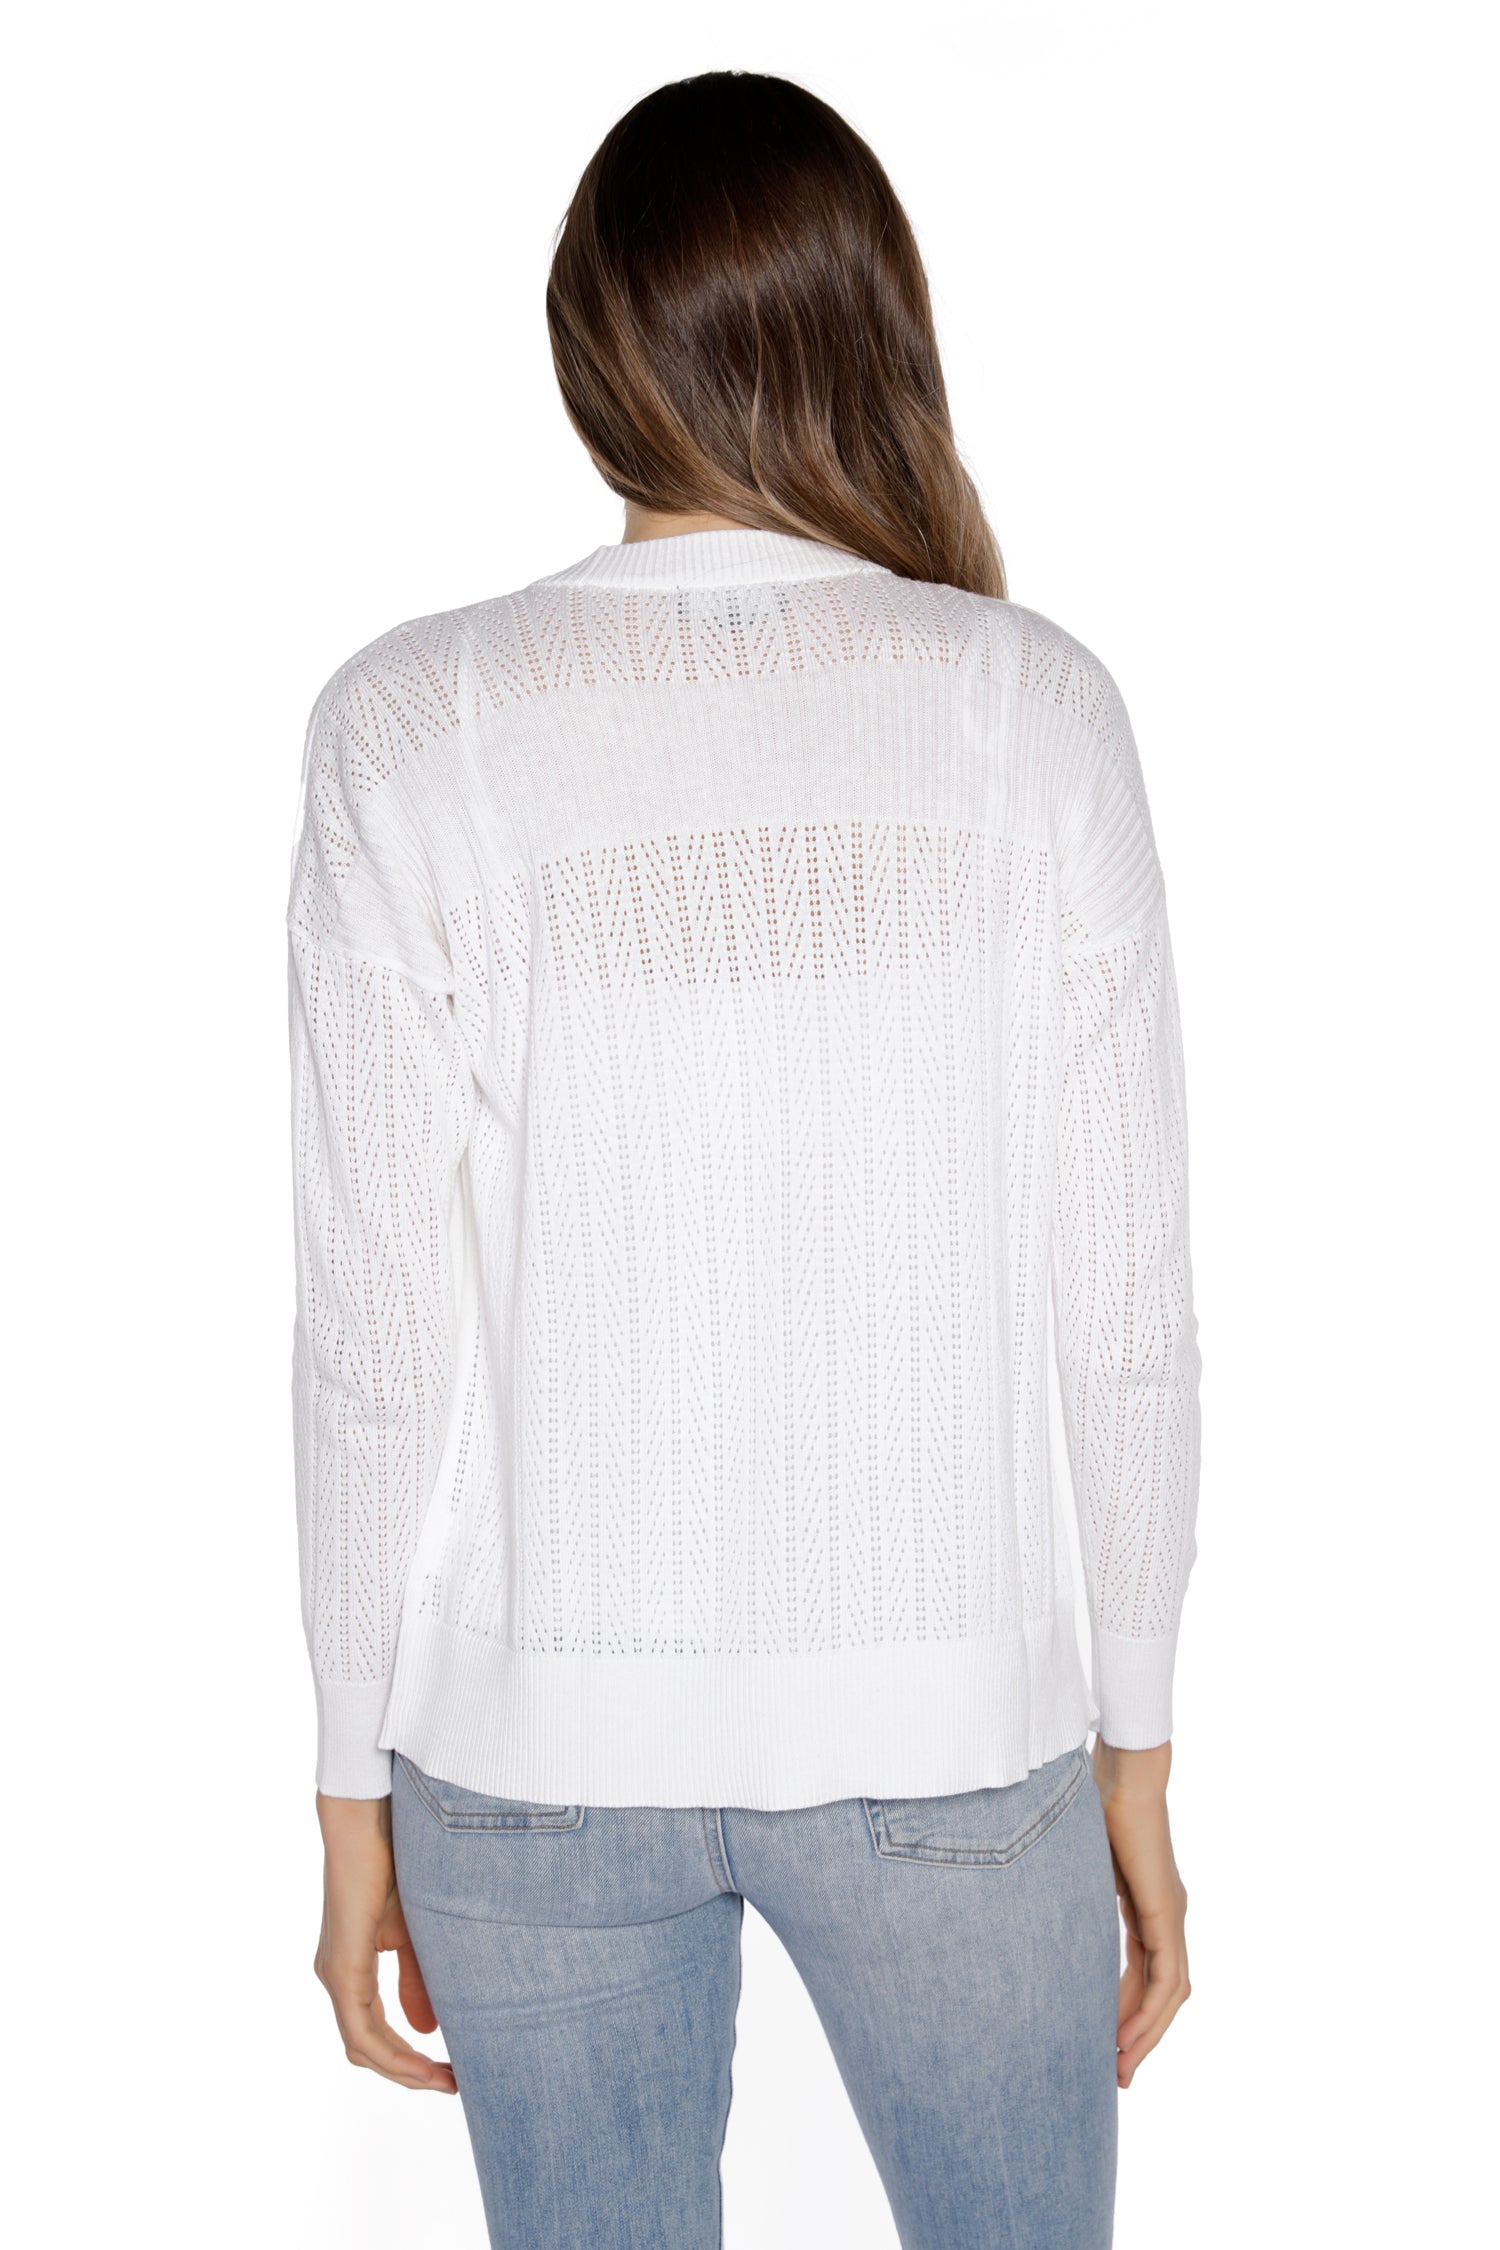 Women's Cardigan Solid Knit Sweater Blocked by a Diagonal Pointelle Pattern